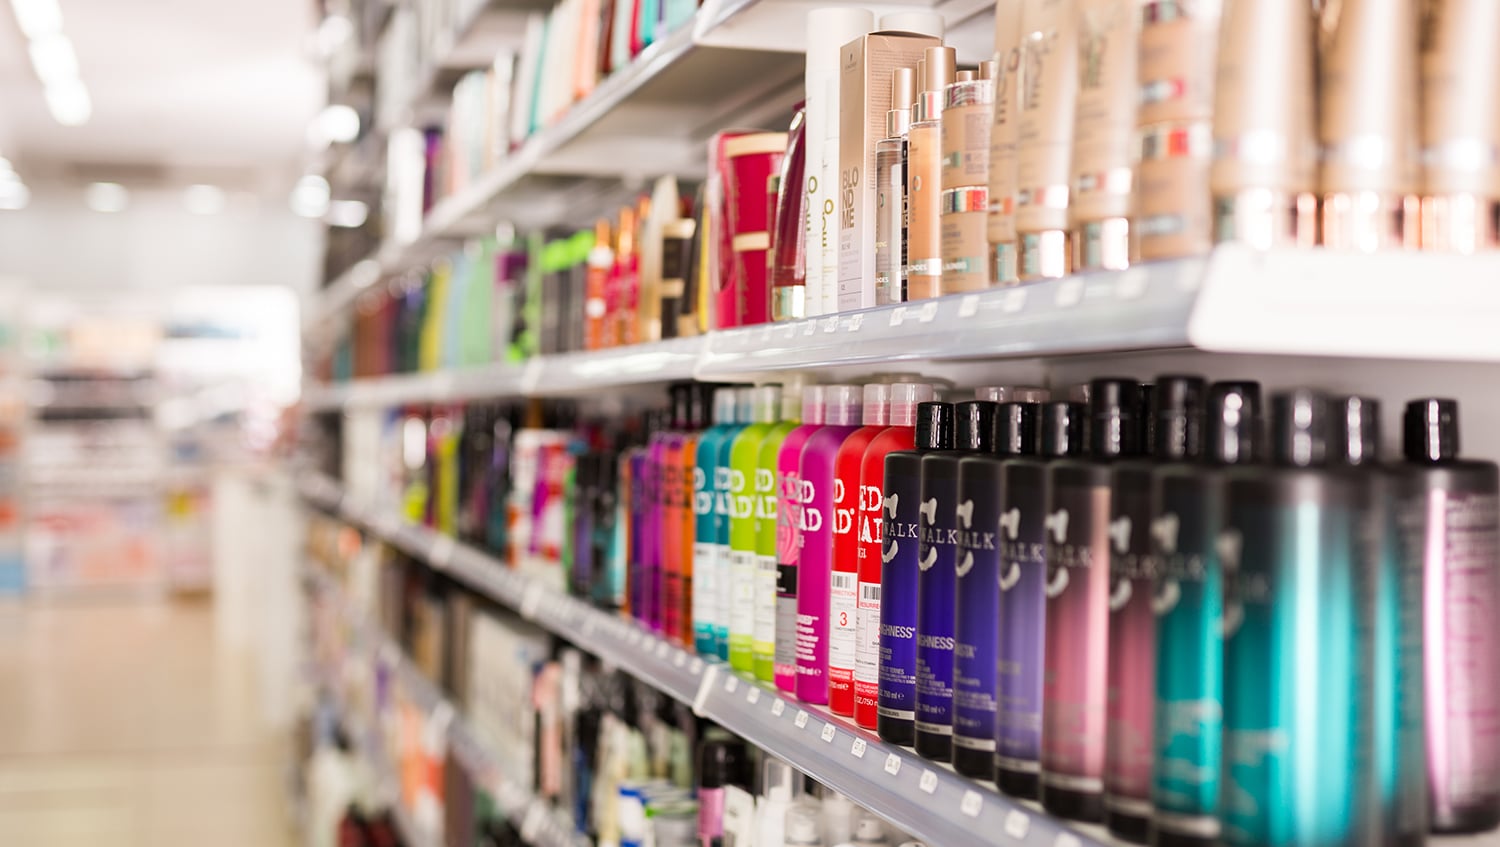 Hair Care items on a drugstore shelf